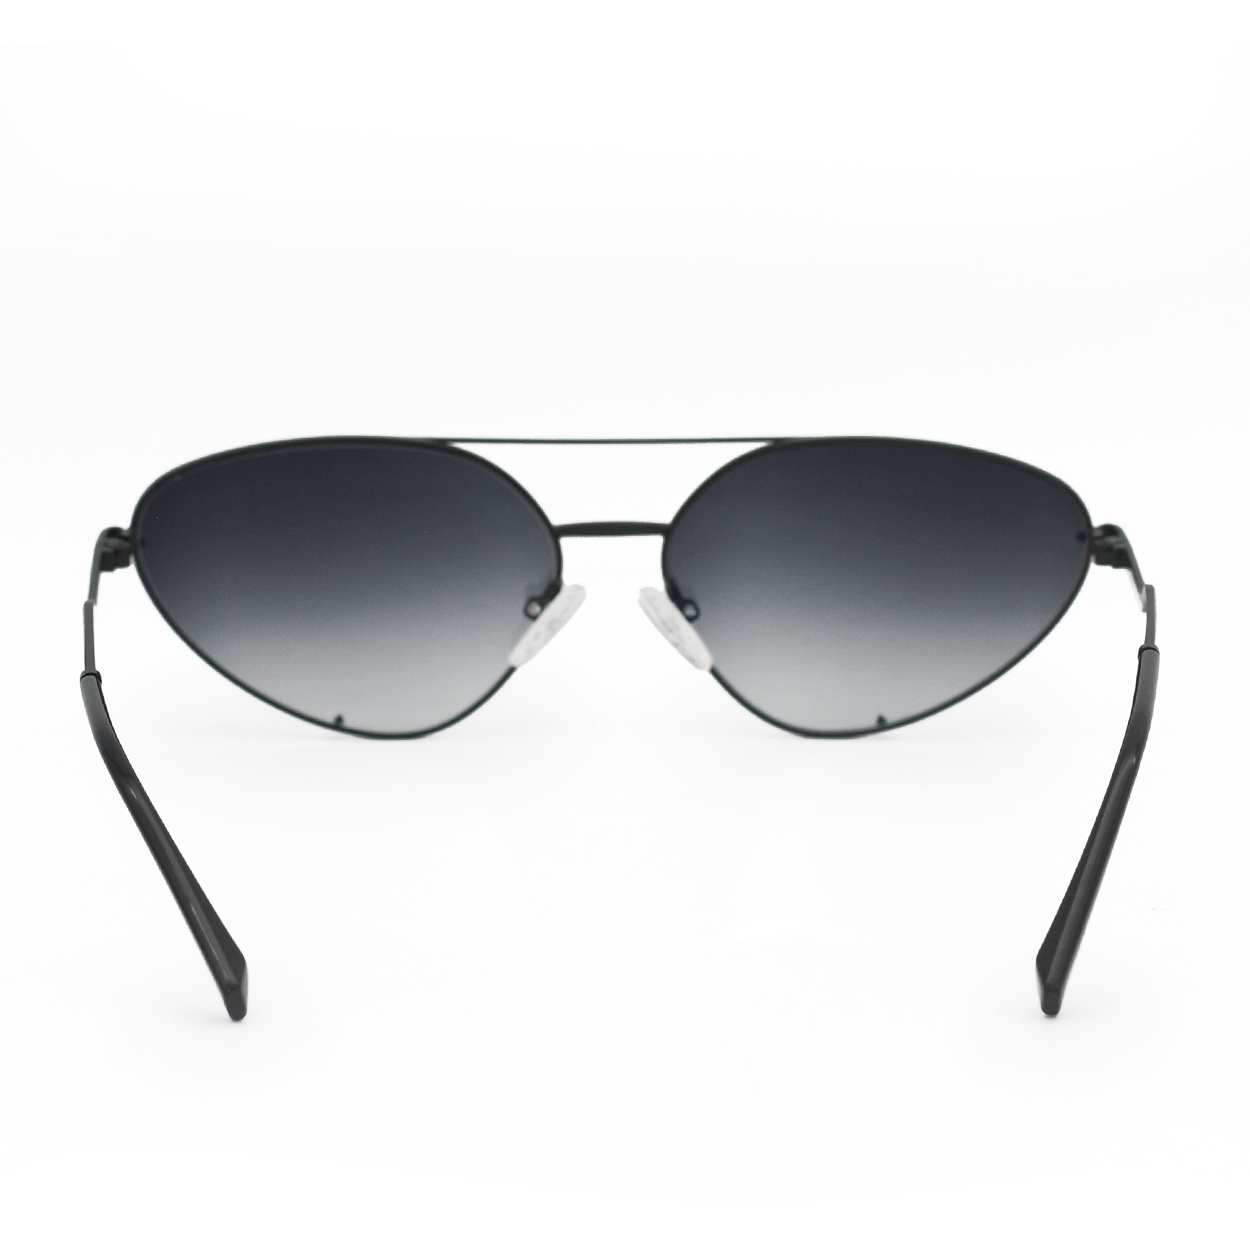 Lucky Star Sunglasses | Faded Black